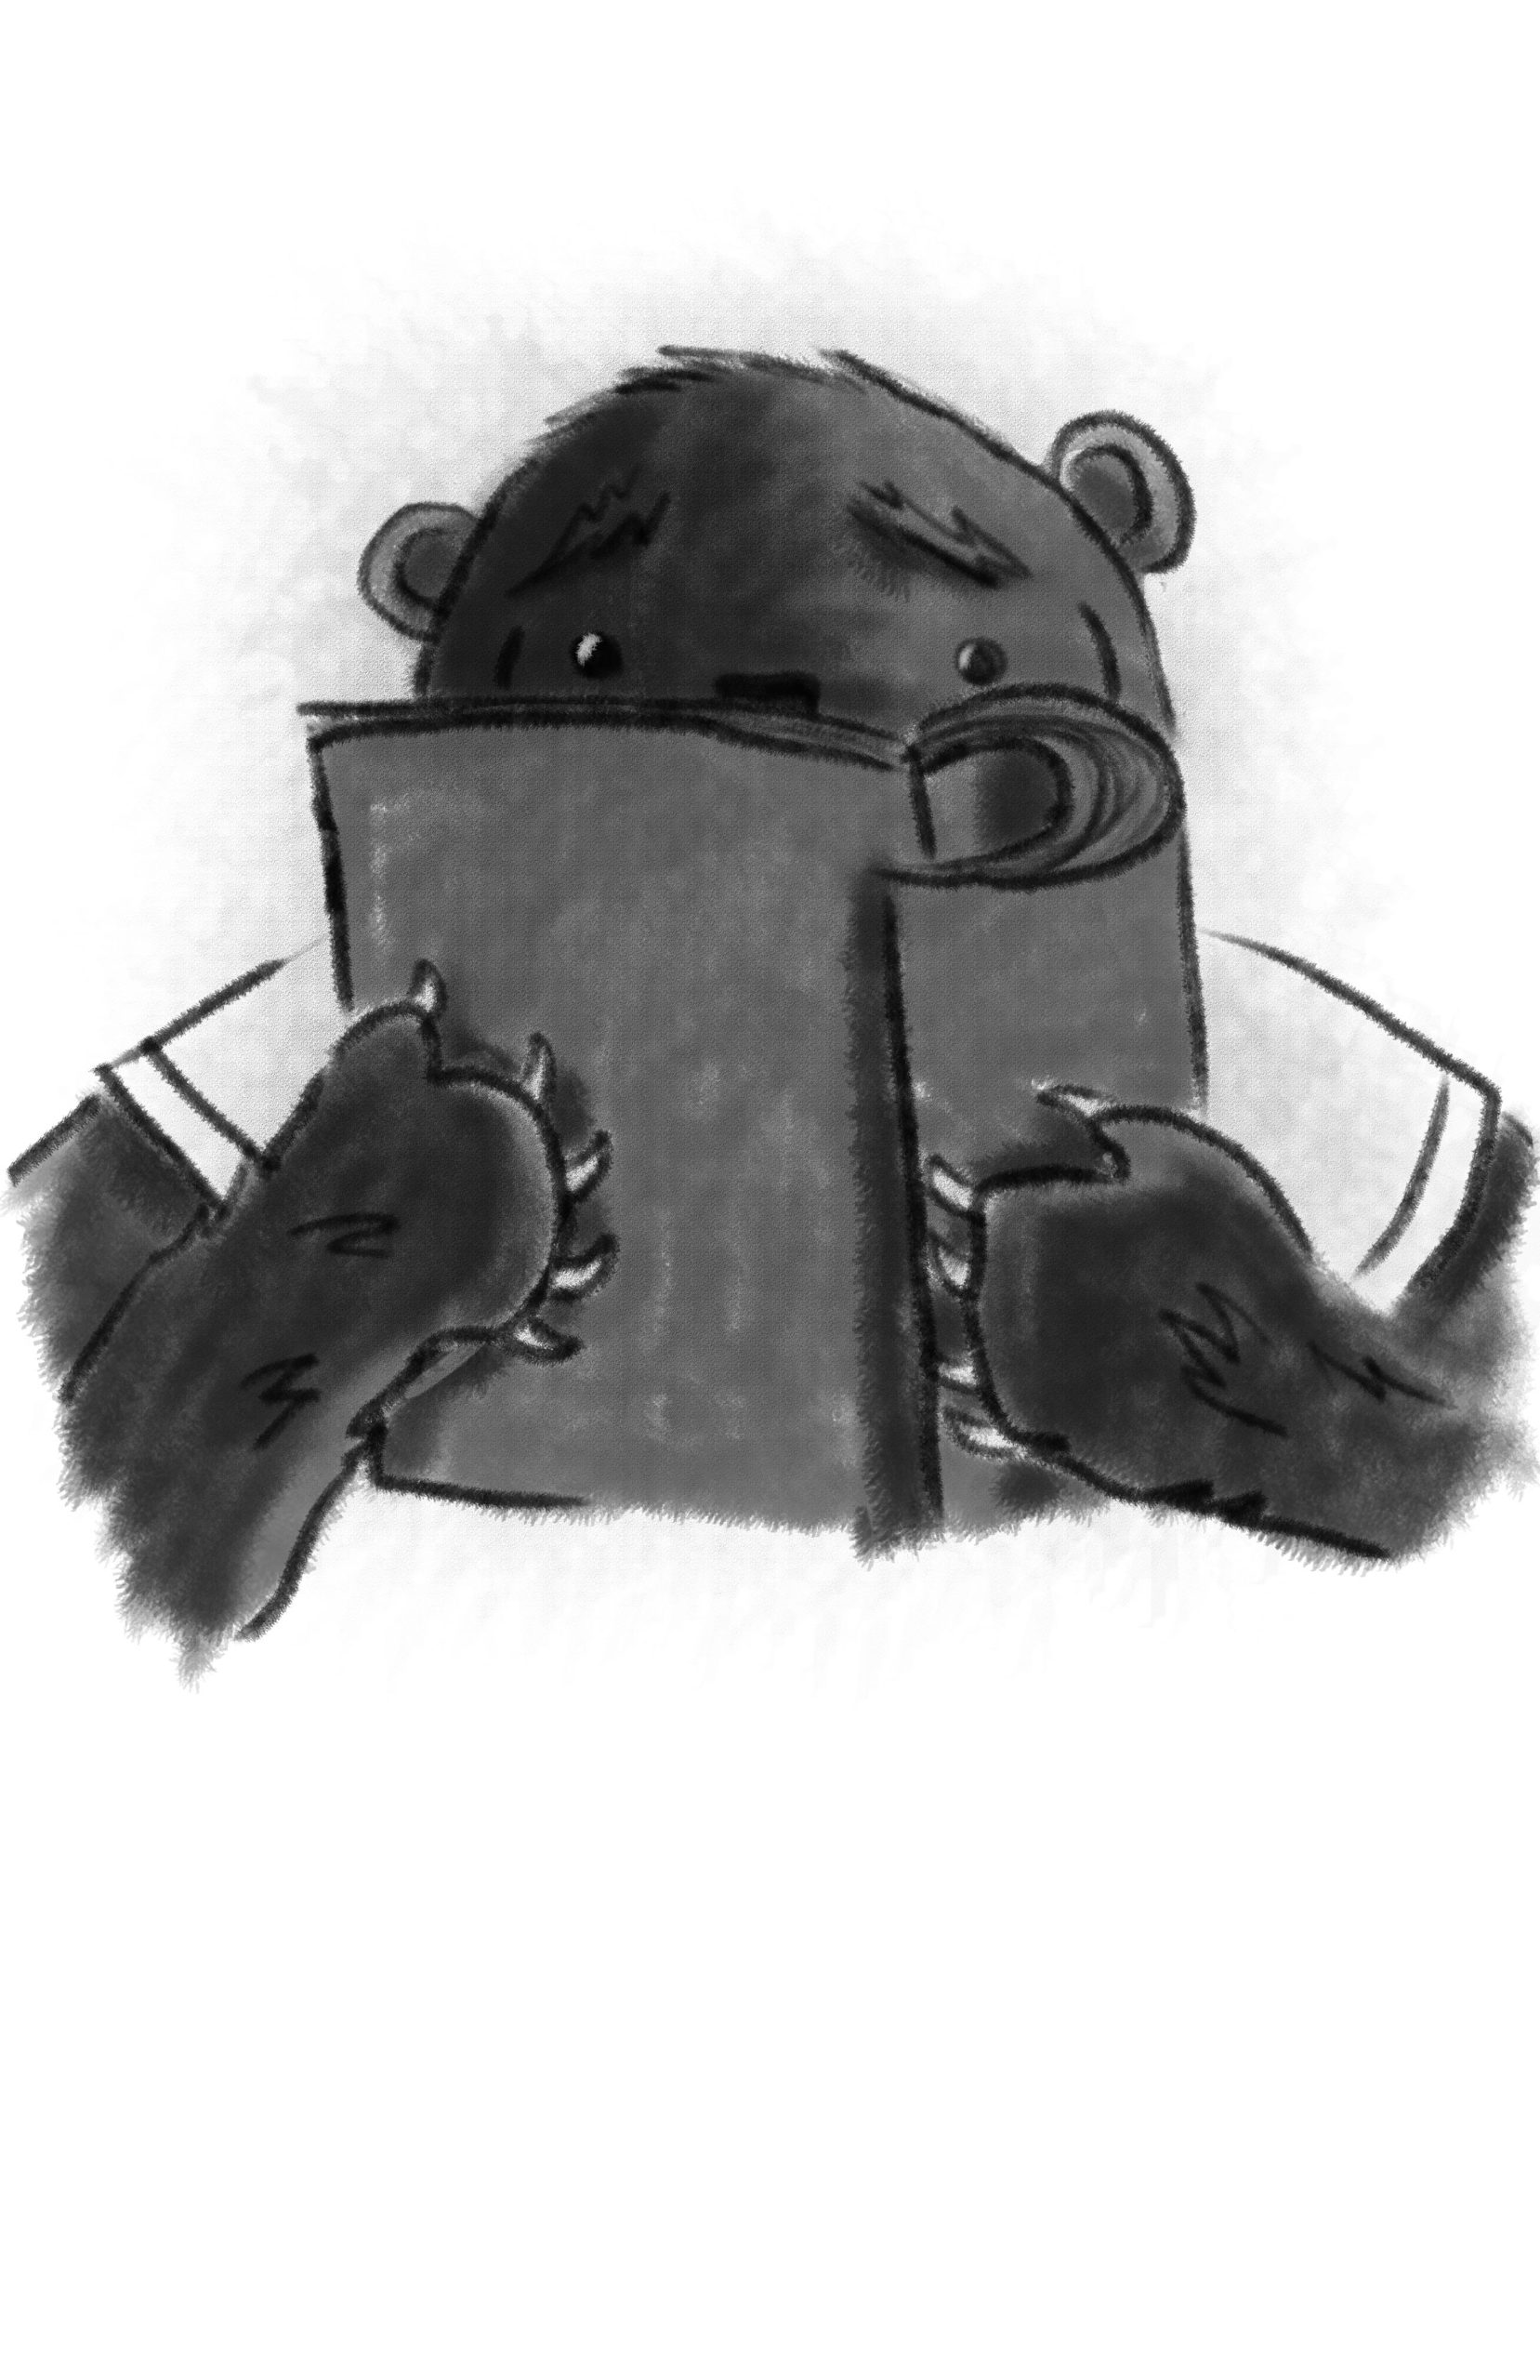 A worried-looking bear reading a script.